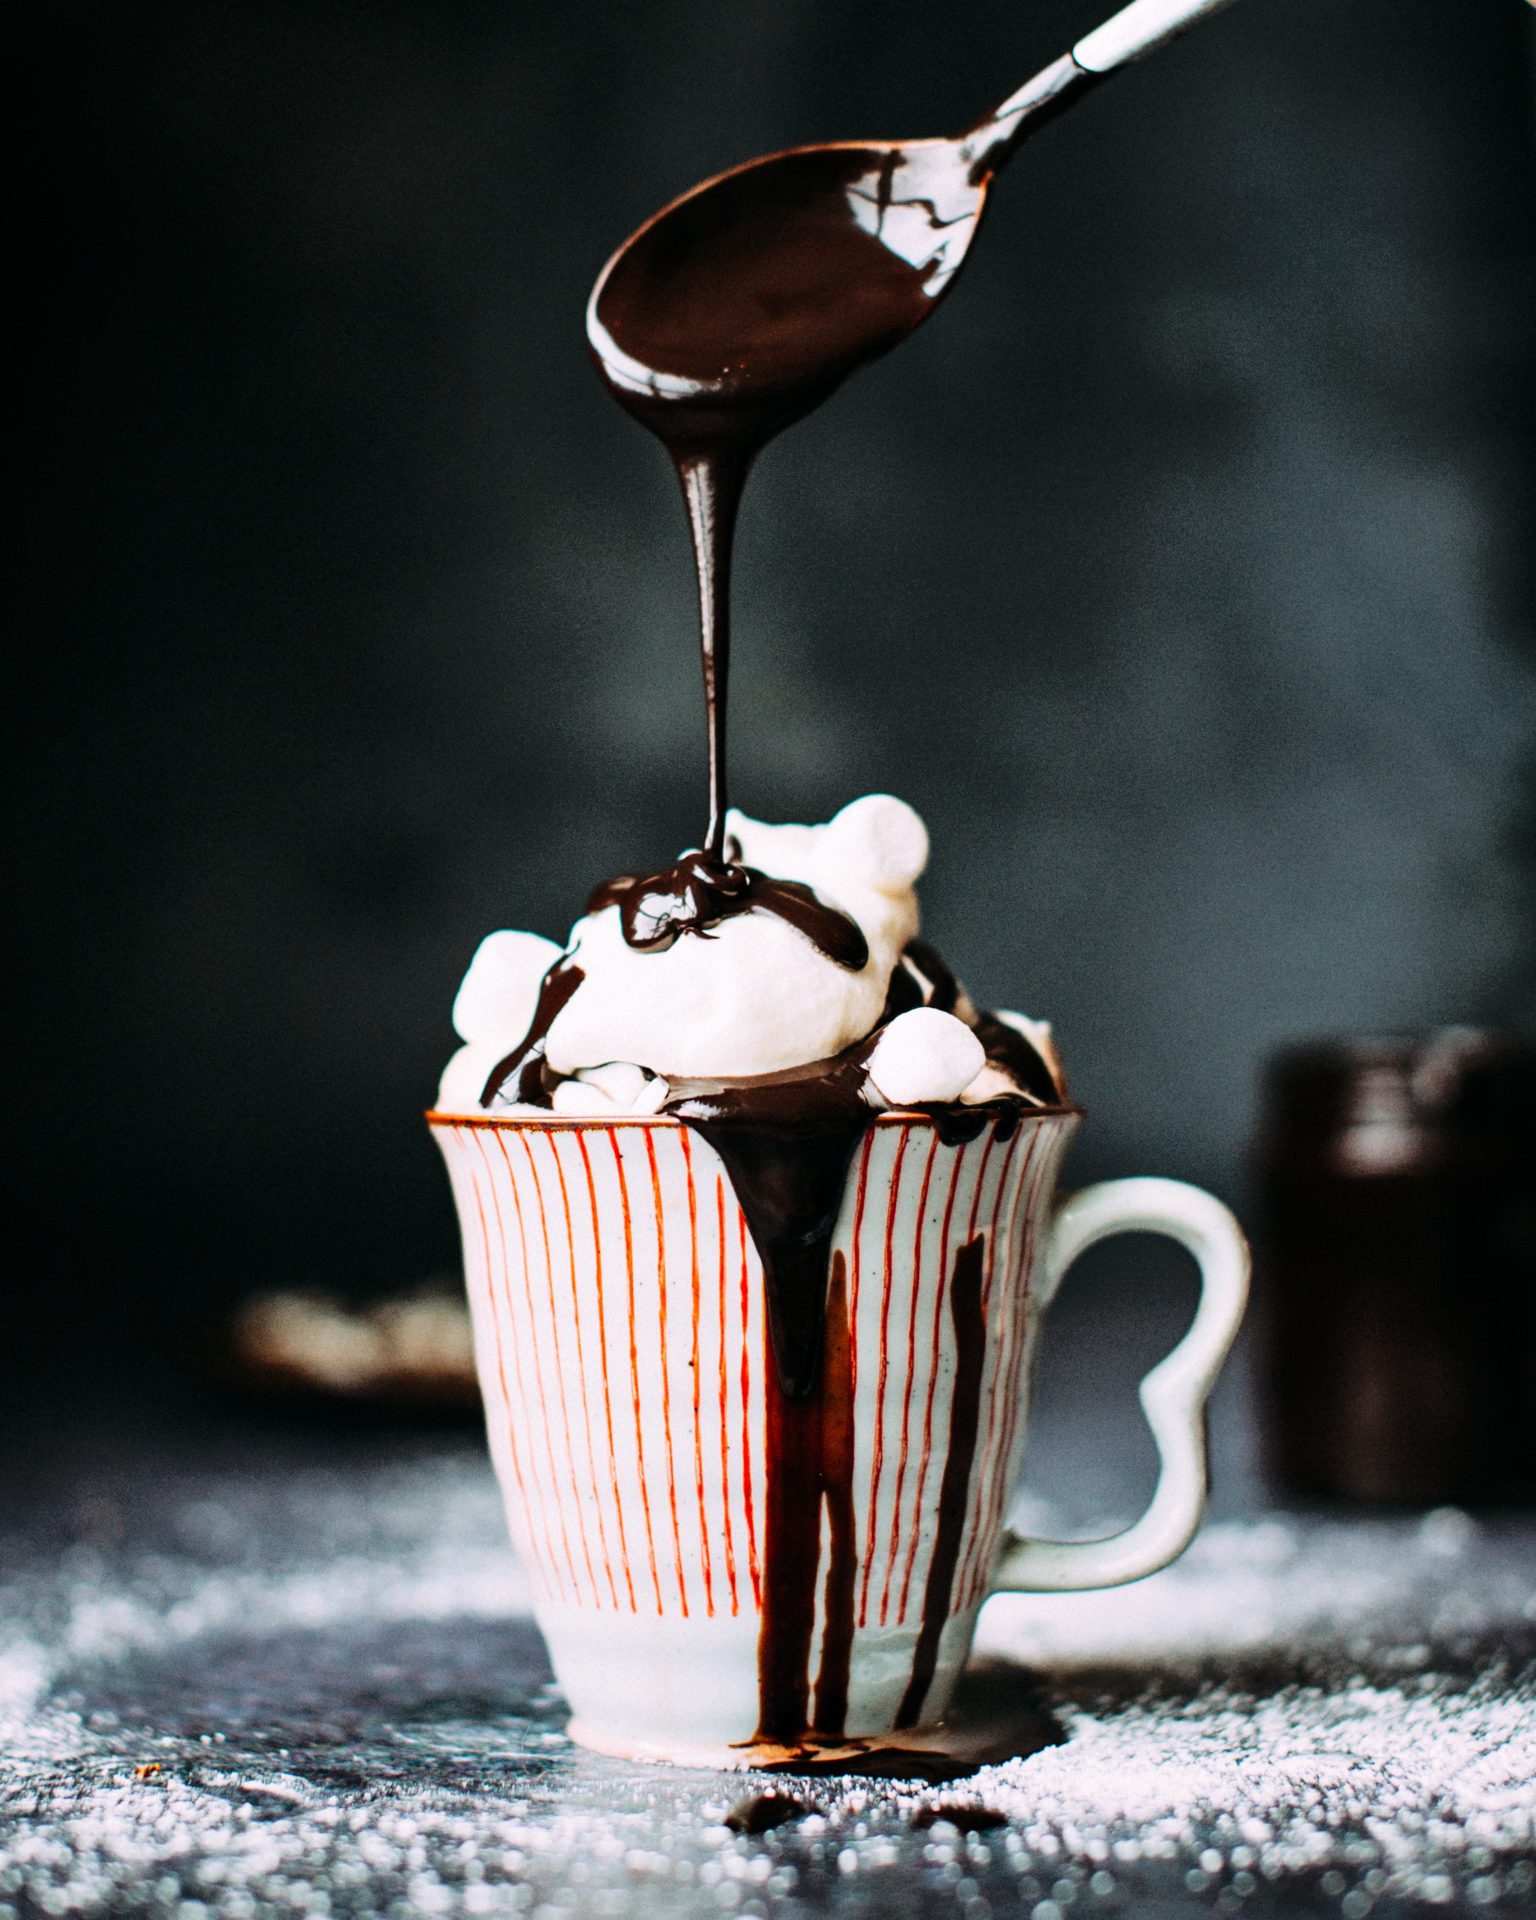 Chocolate pudding on vanilla ice cream in ceramic cup: Photo by Food Photographer | Jennifer Pallian on Unsplash